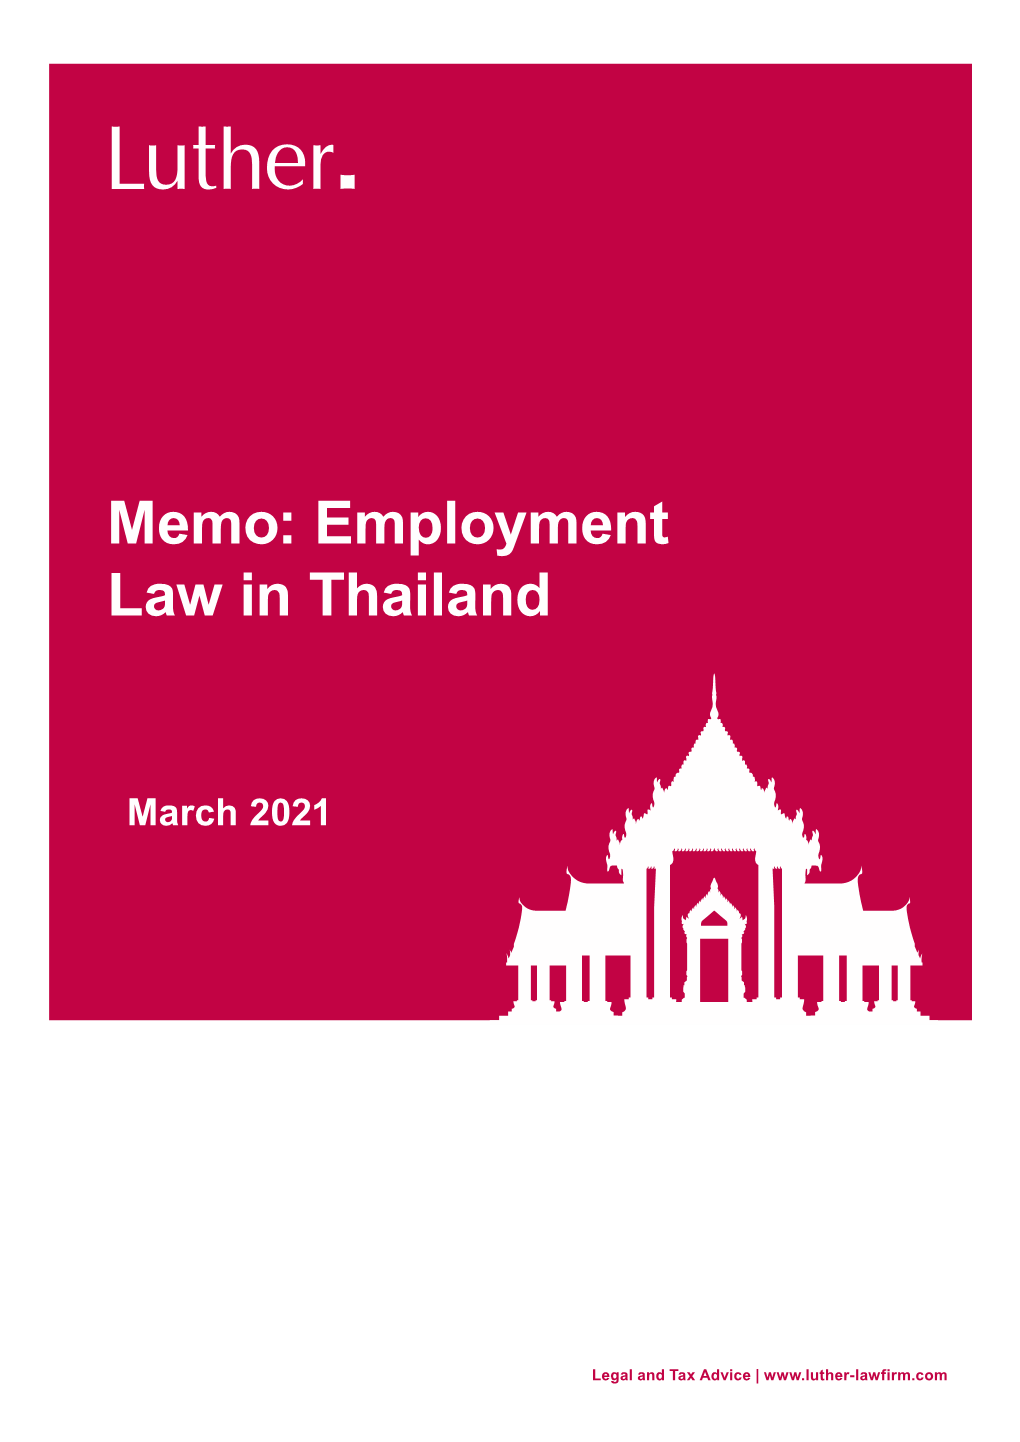 Memo: Employment Law in Thailand